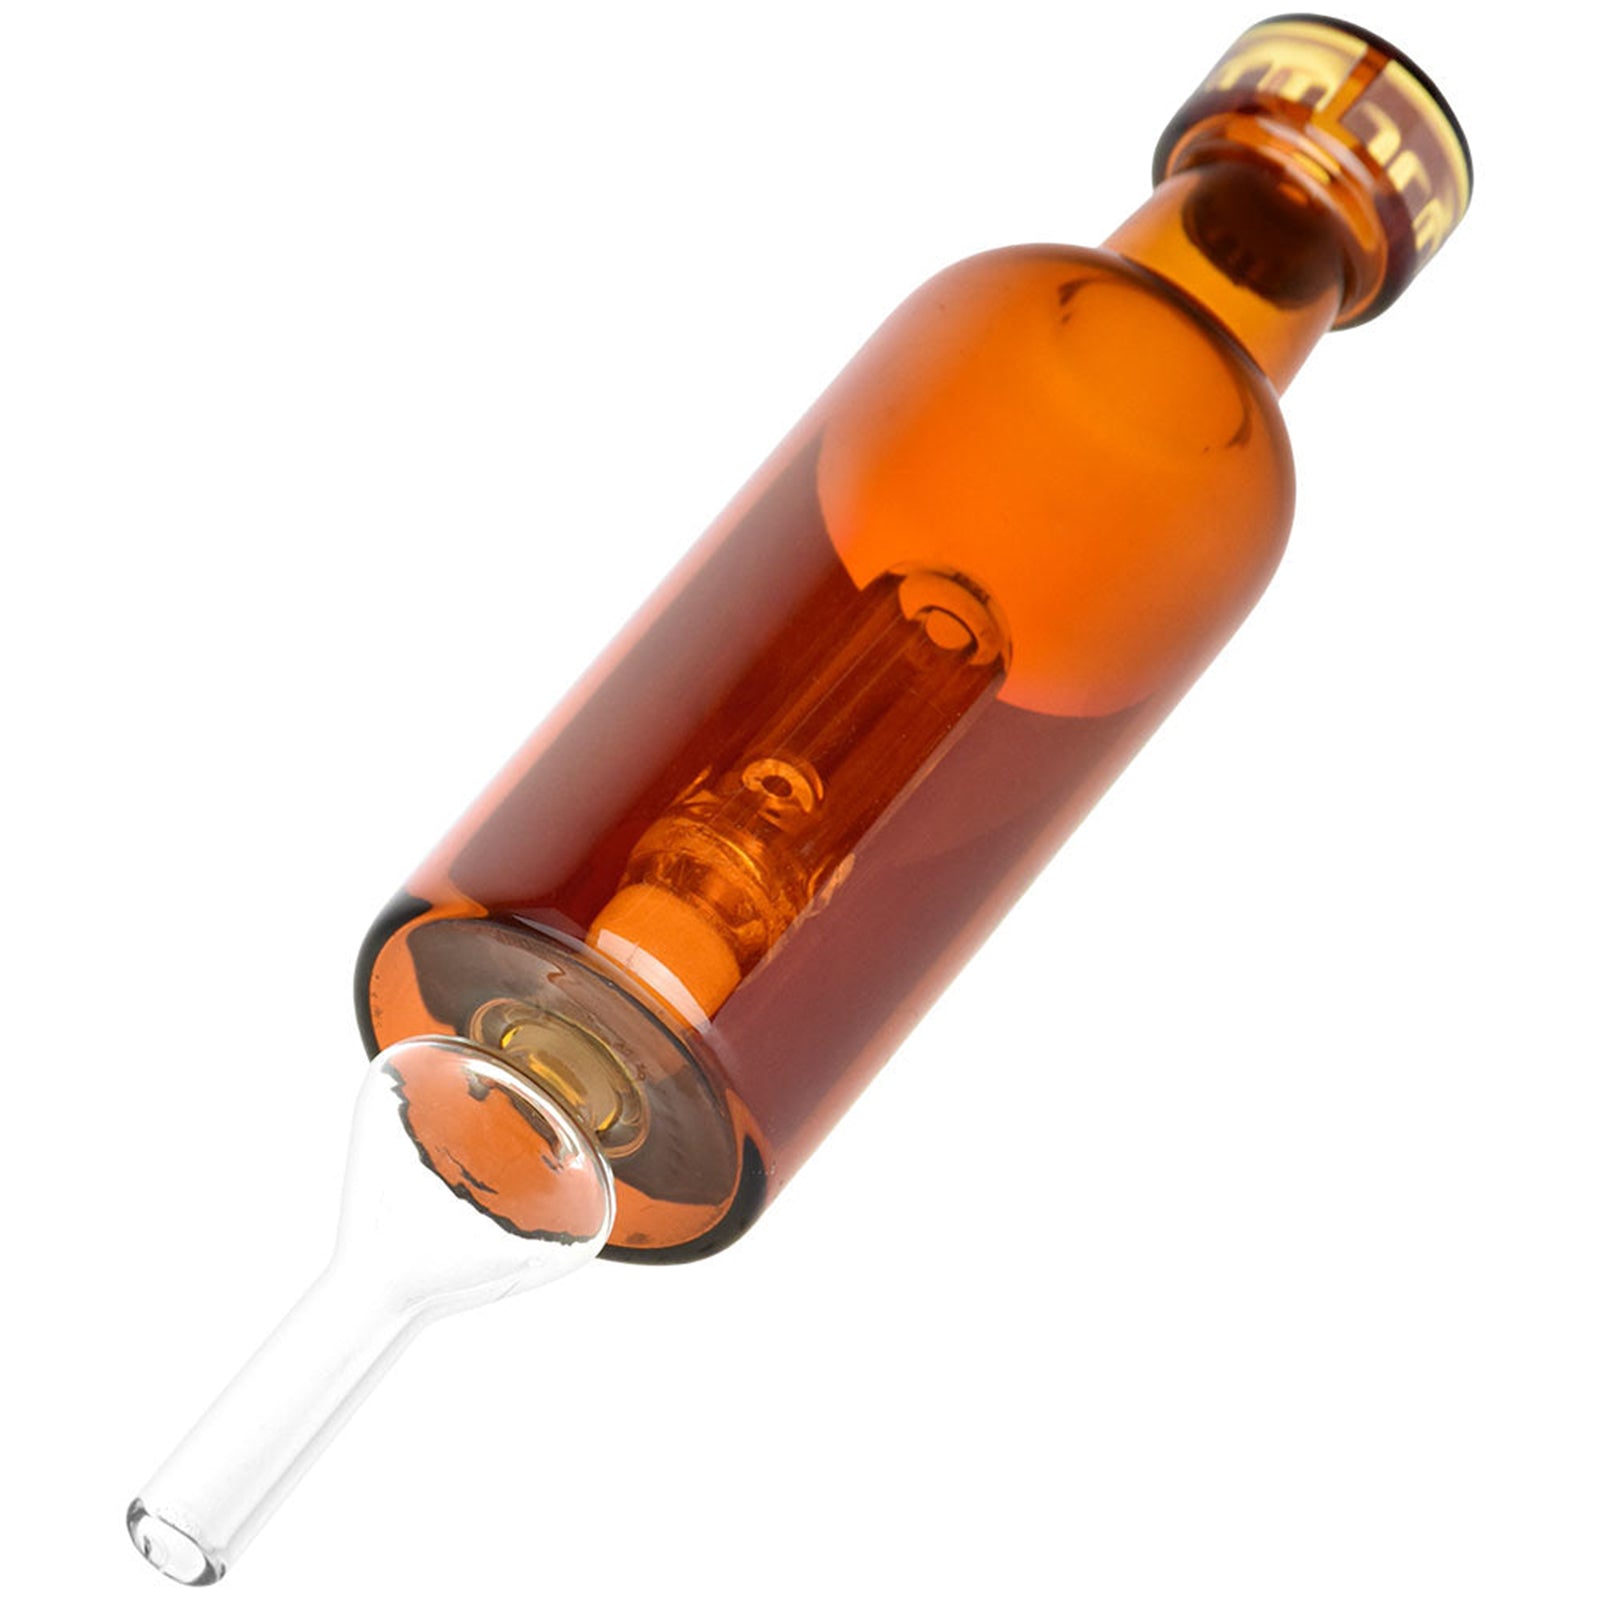 Dabtized Liquor Bottle Bubbler Dab Straw - INHALCO